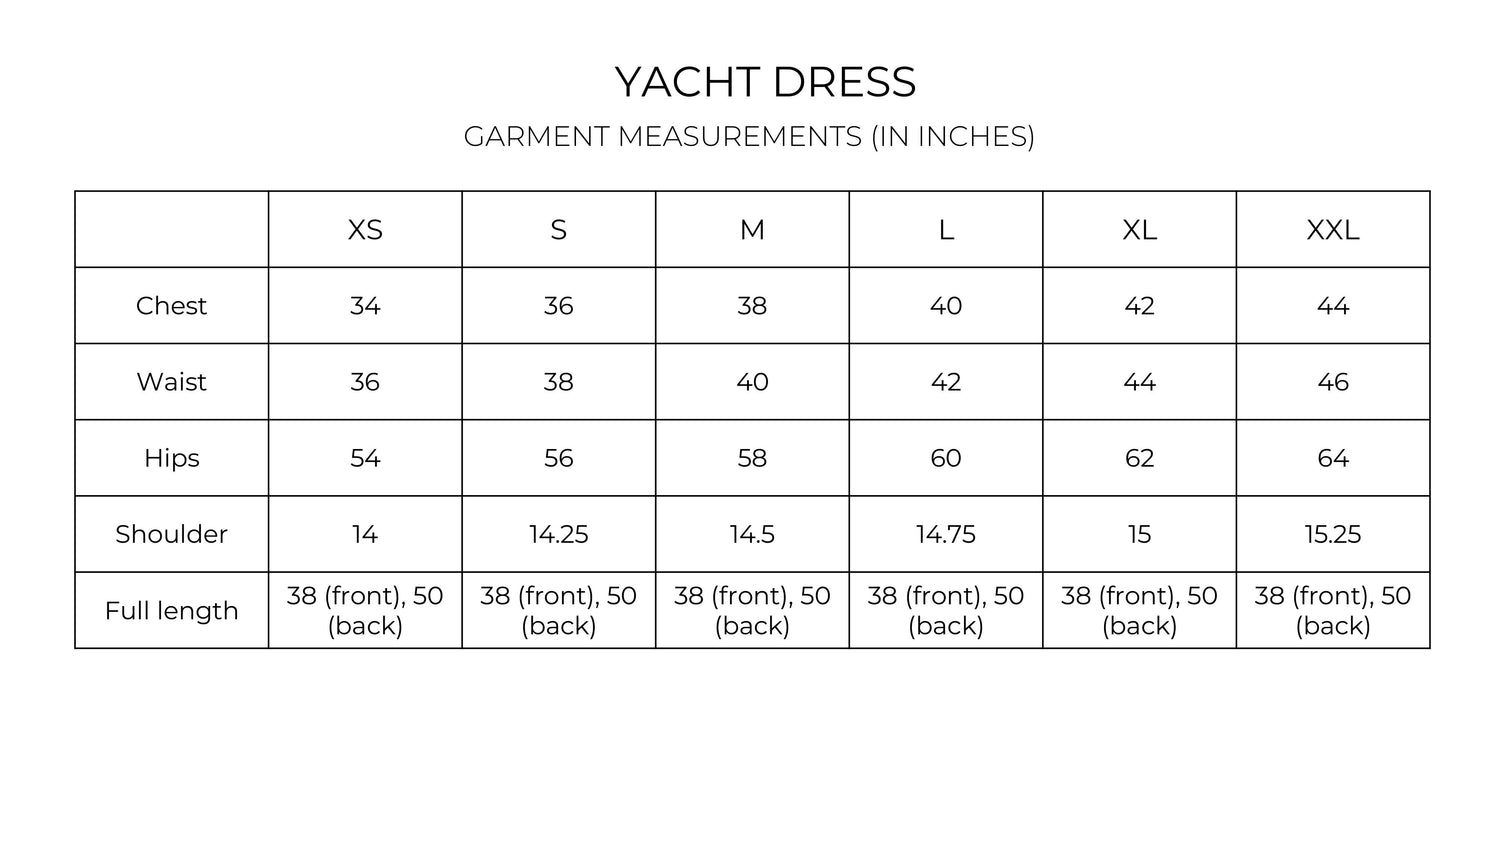 Yacht Dress